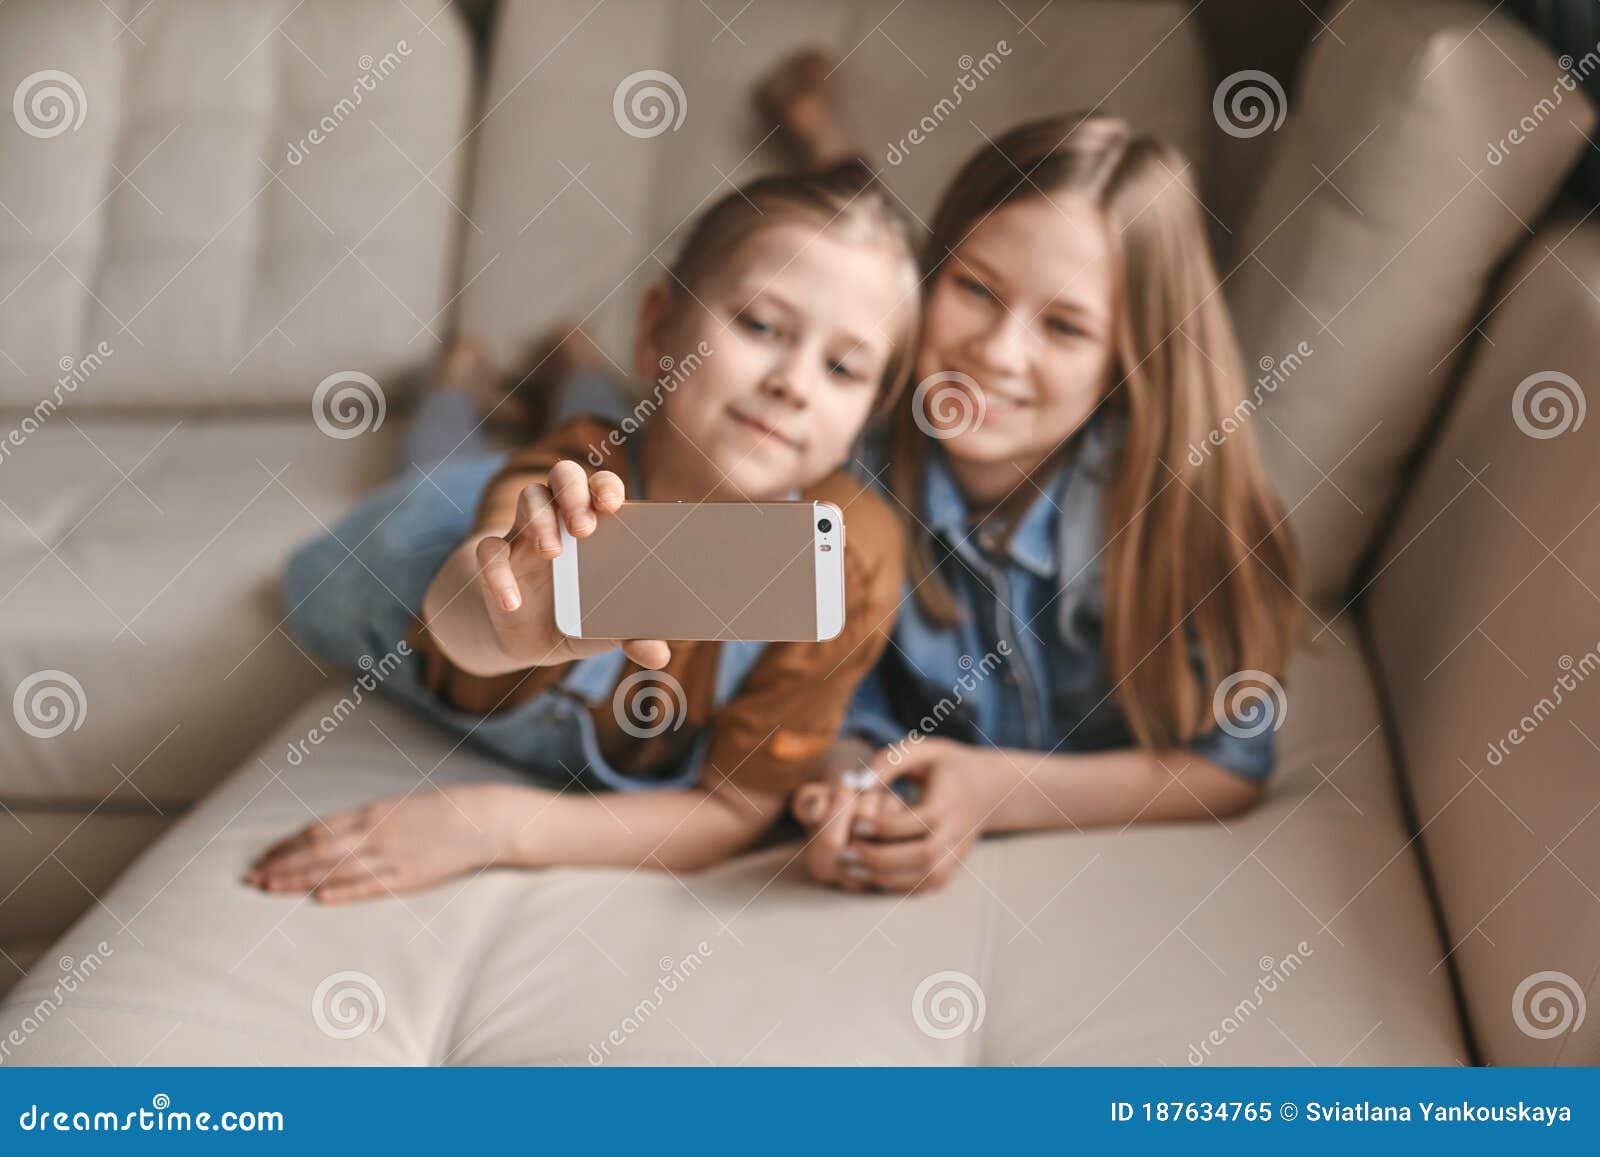 Beautiful Girls Take Selfies on Their Phone while Lying on the Sofa ...